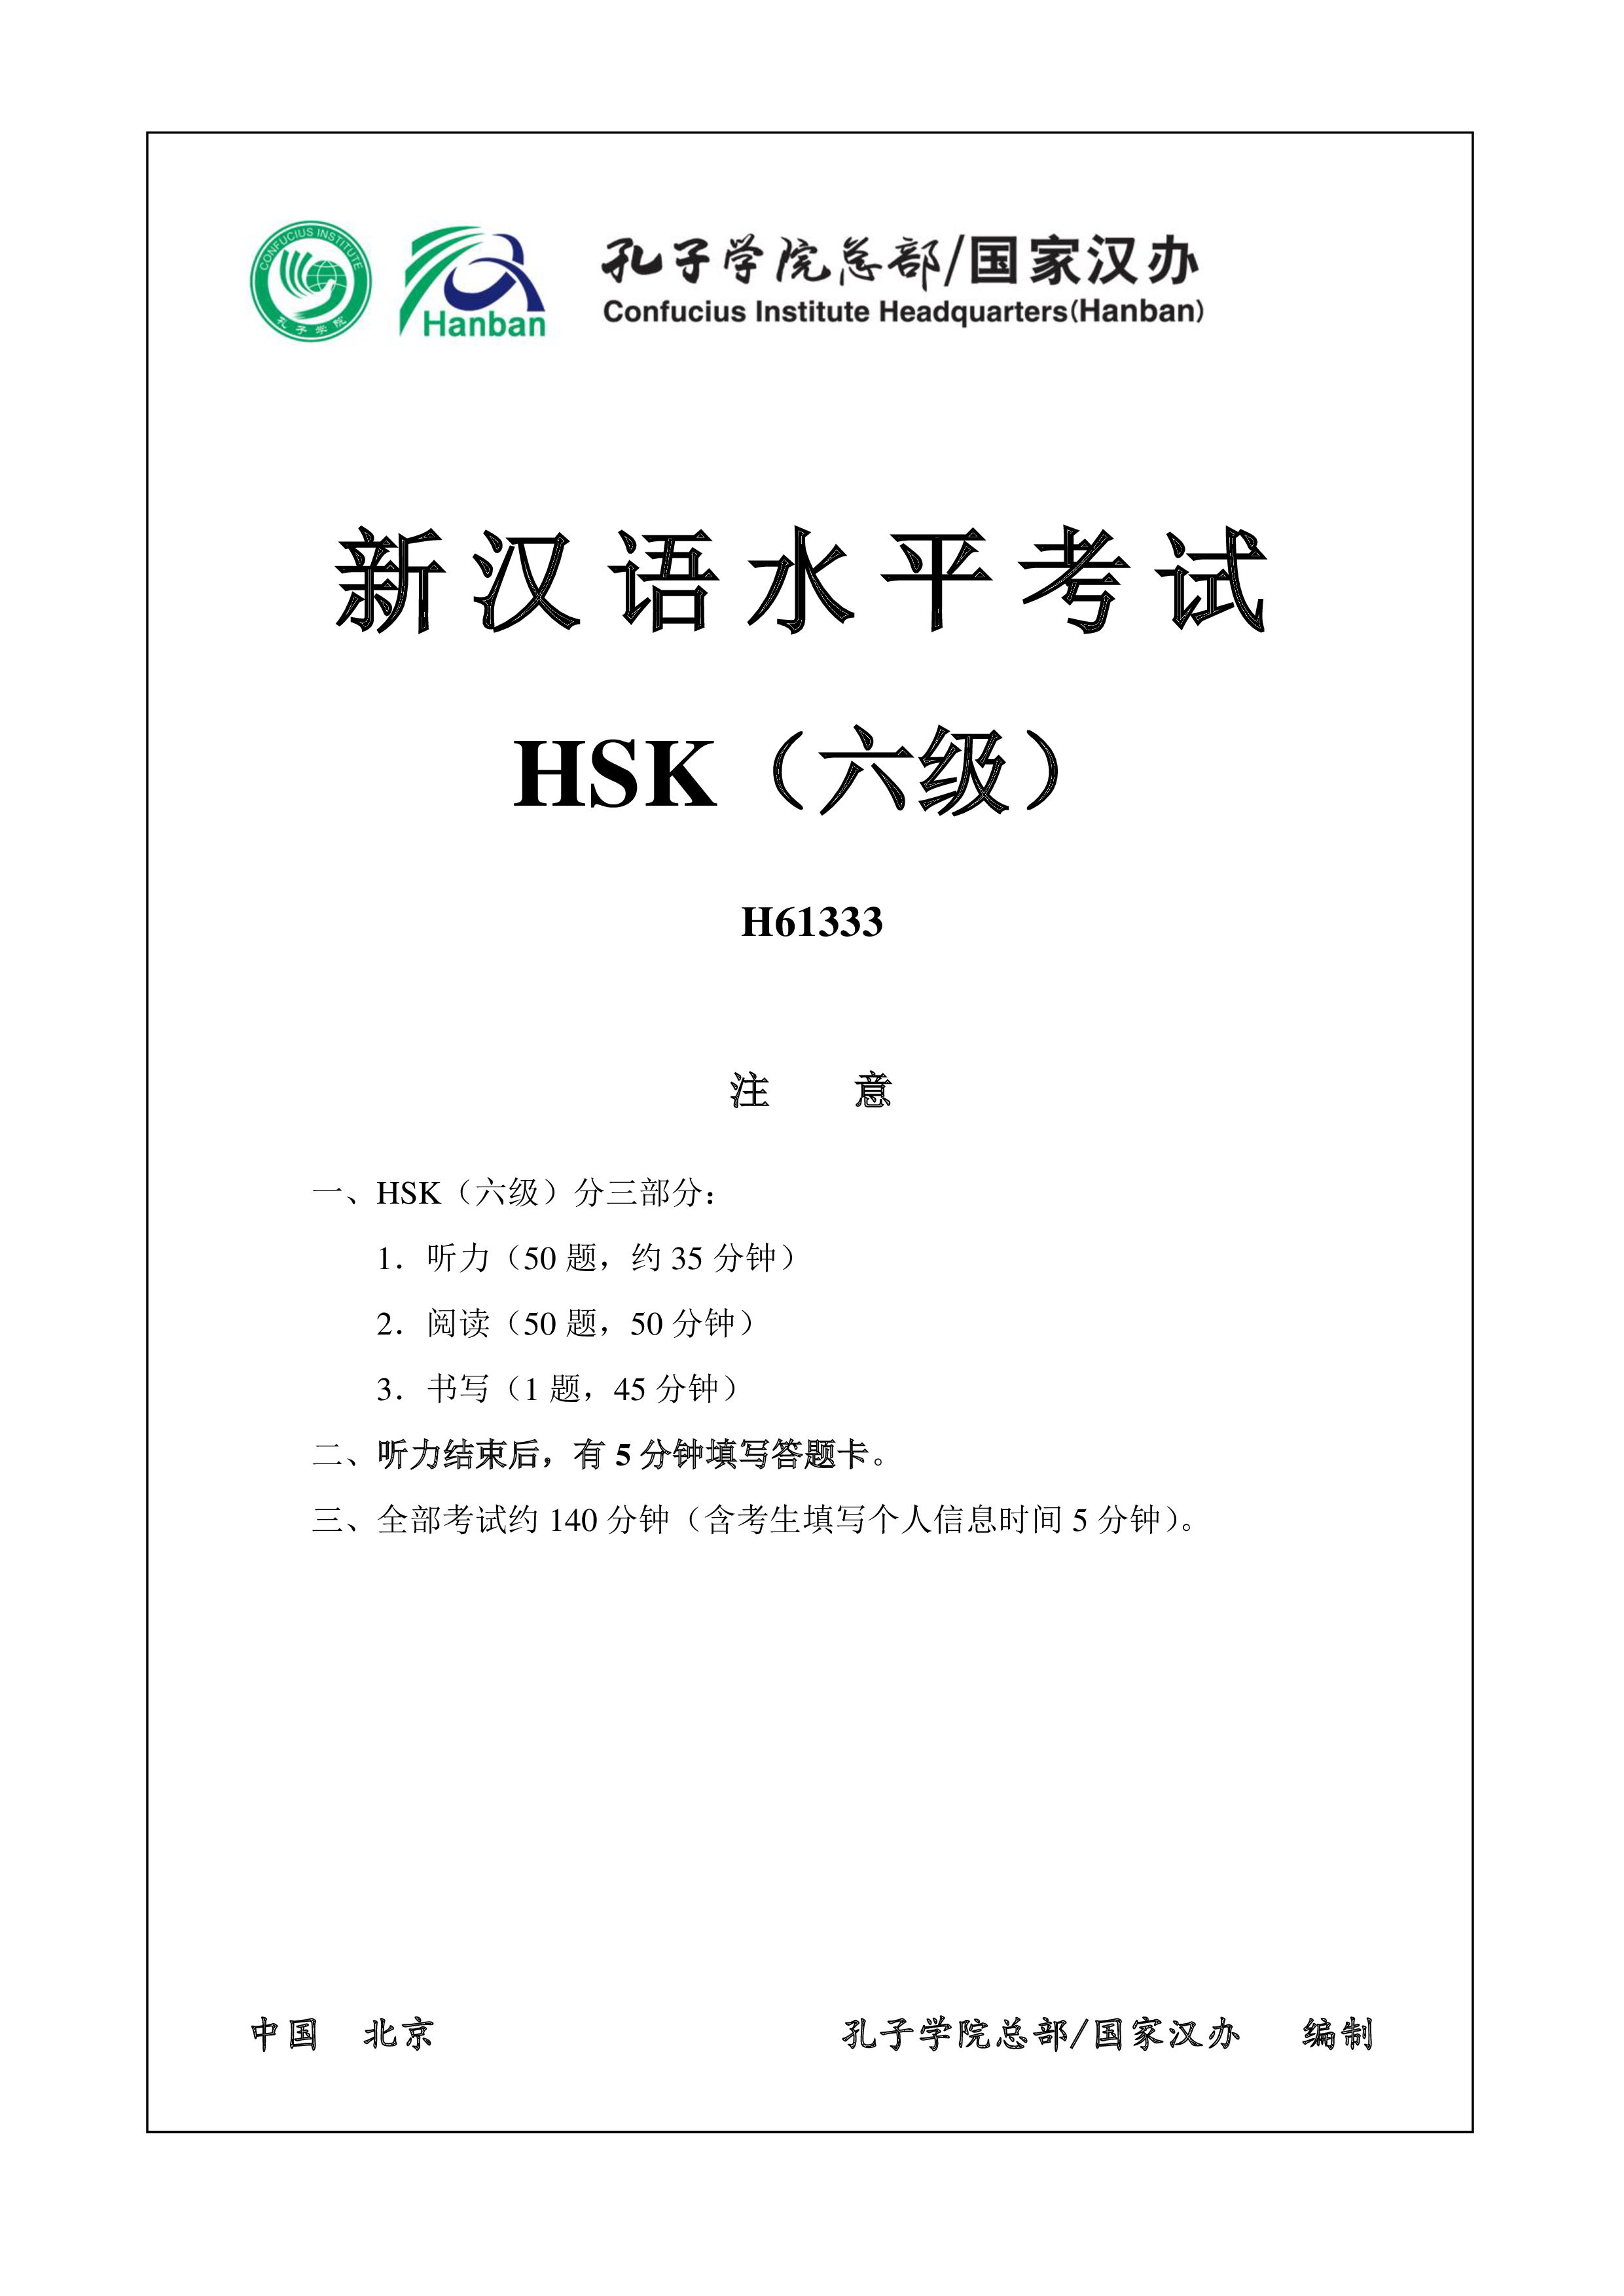 hsk6 chinese exam incl audio, answers # h61333 plantilla imagen principal